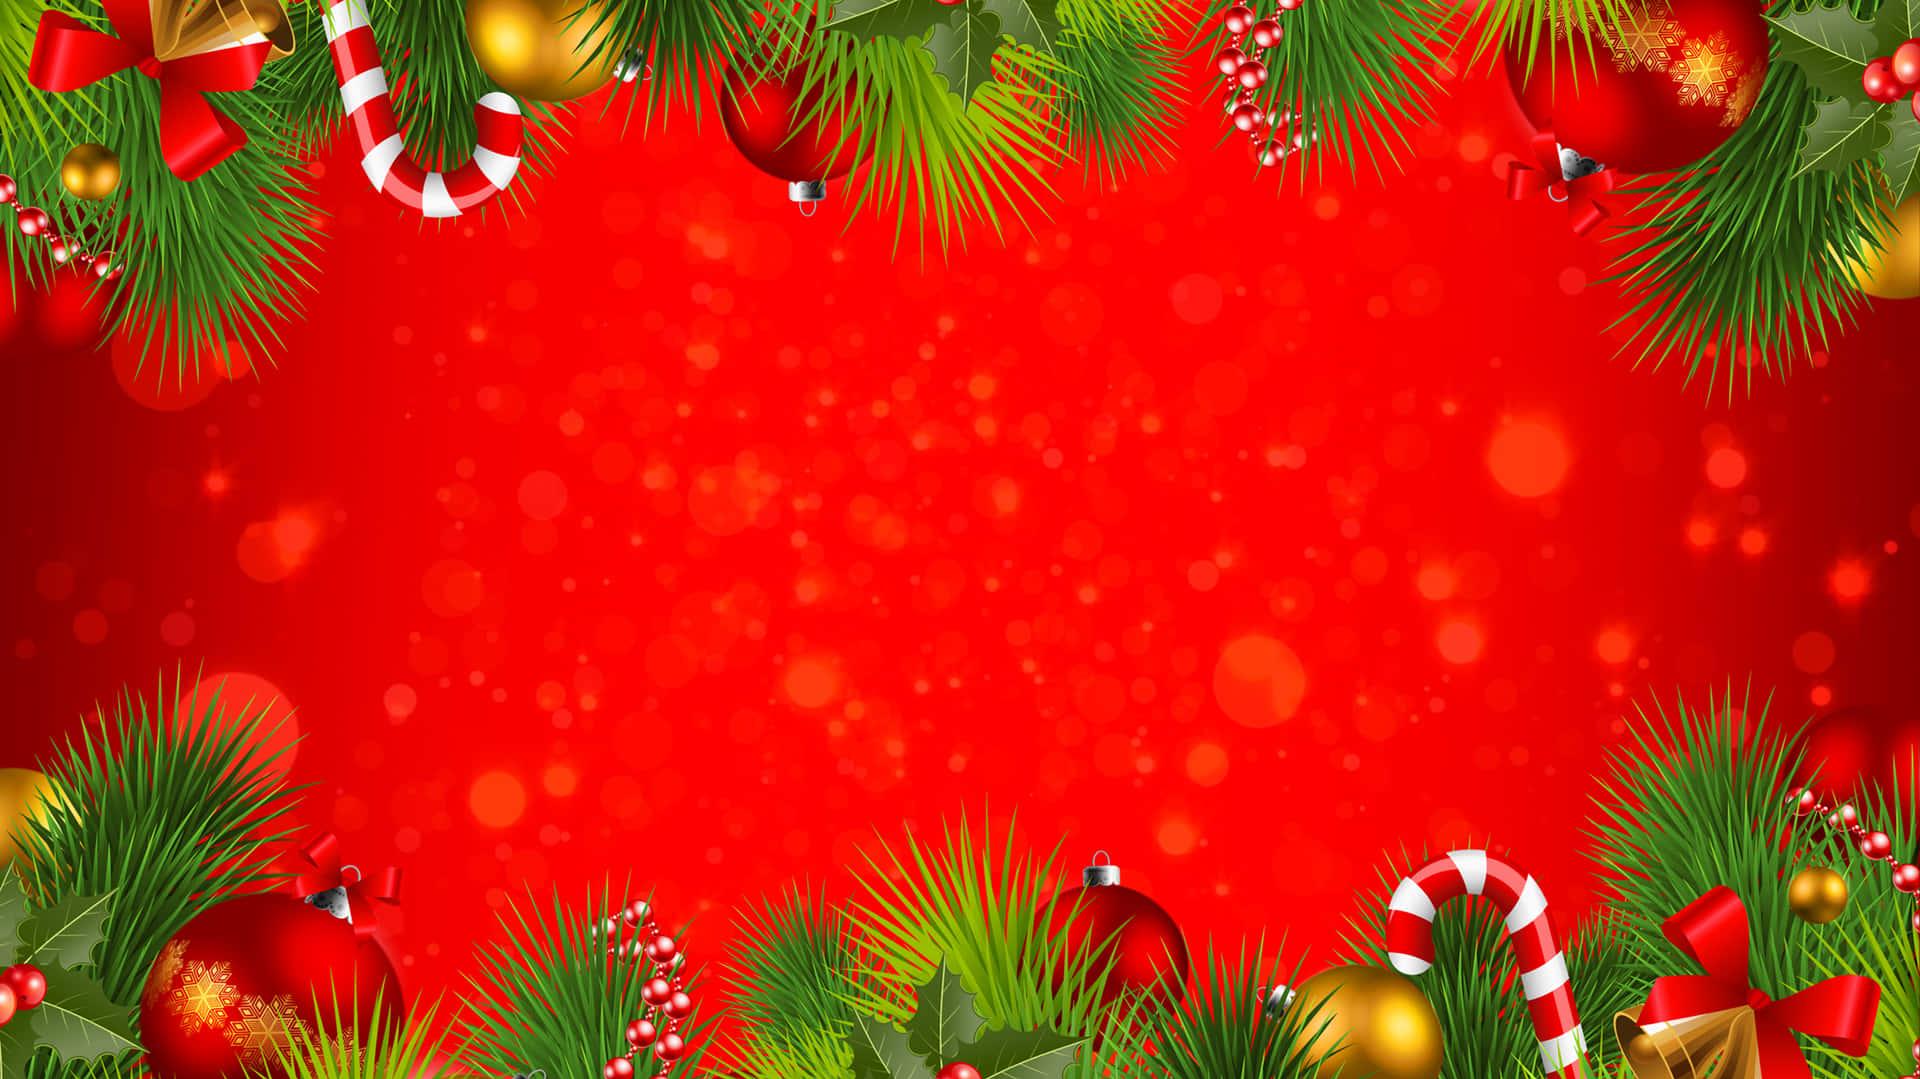 Download Festive Christmas Background in 4K Resolution Wallpaper